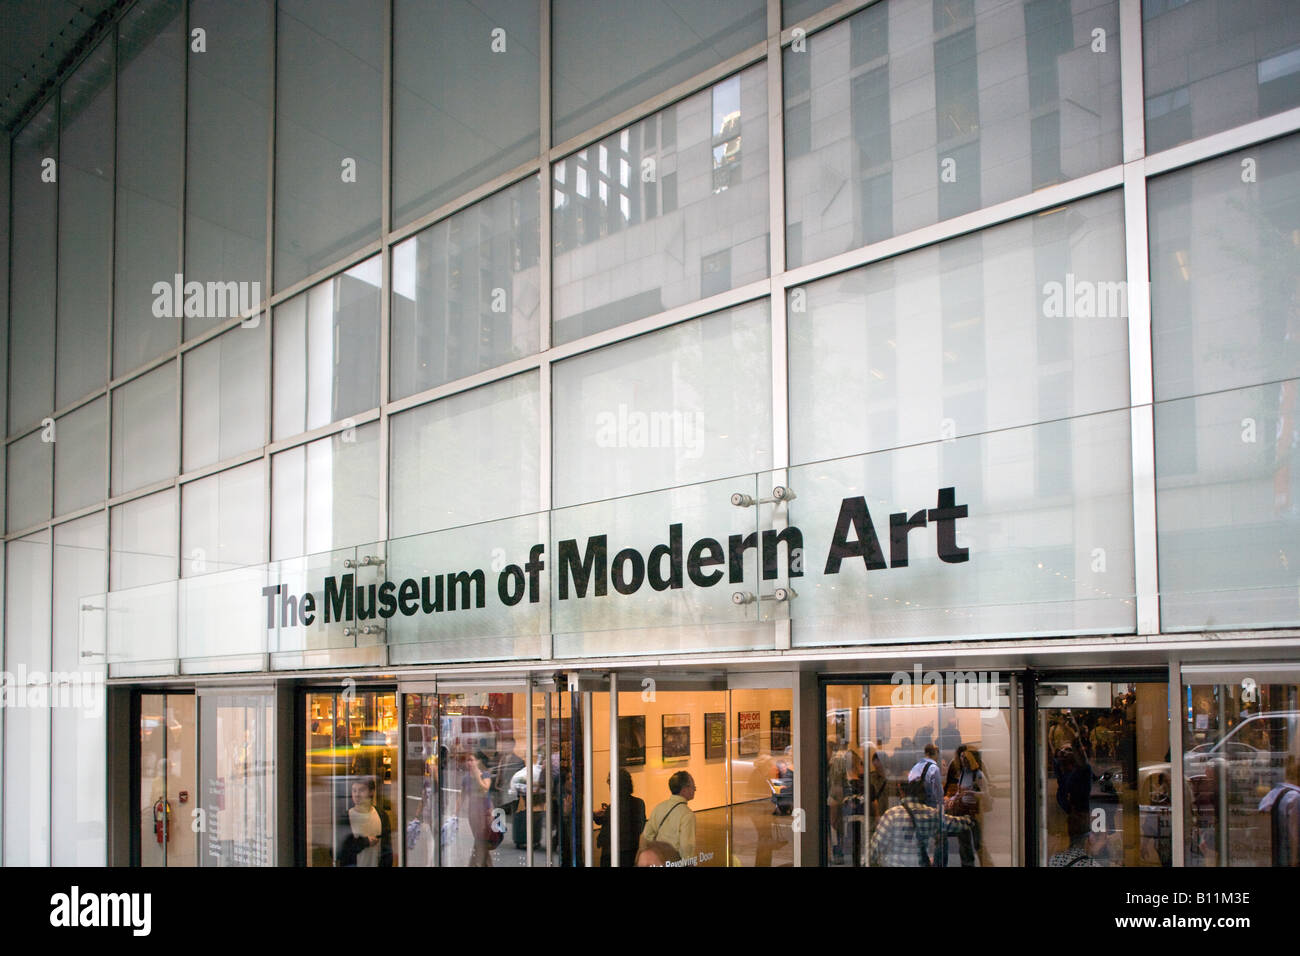 Tæl op Faciliteter ru MOMA ENTRANCE SIGN MUSEUM OF MODERN ART MIDTOWN FIFTY THIRD STREET  MANHATTAN NEW YORK CITY USA Stock Photo - Alamy